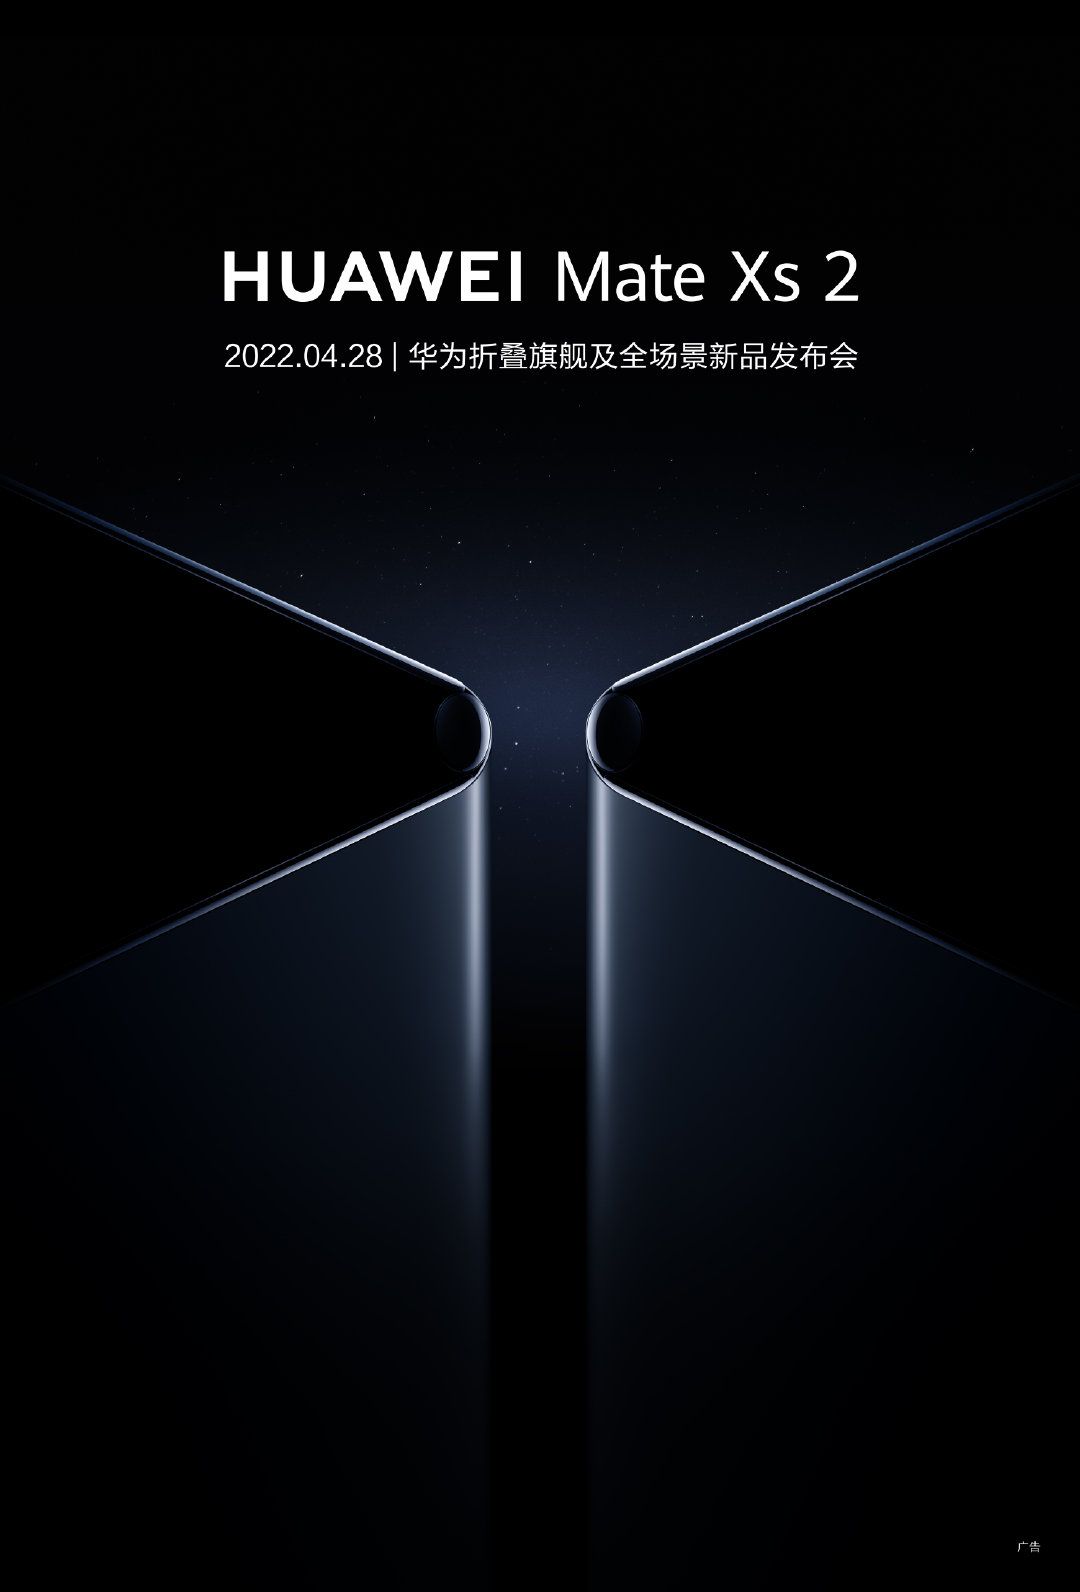 huawei mate x2 launch date announcement